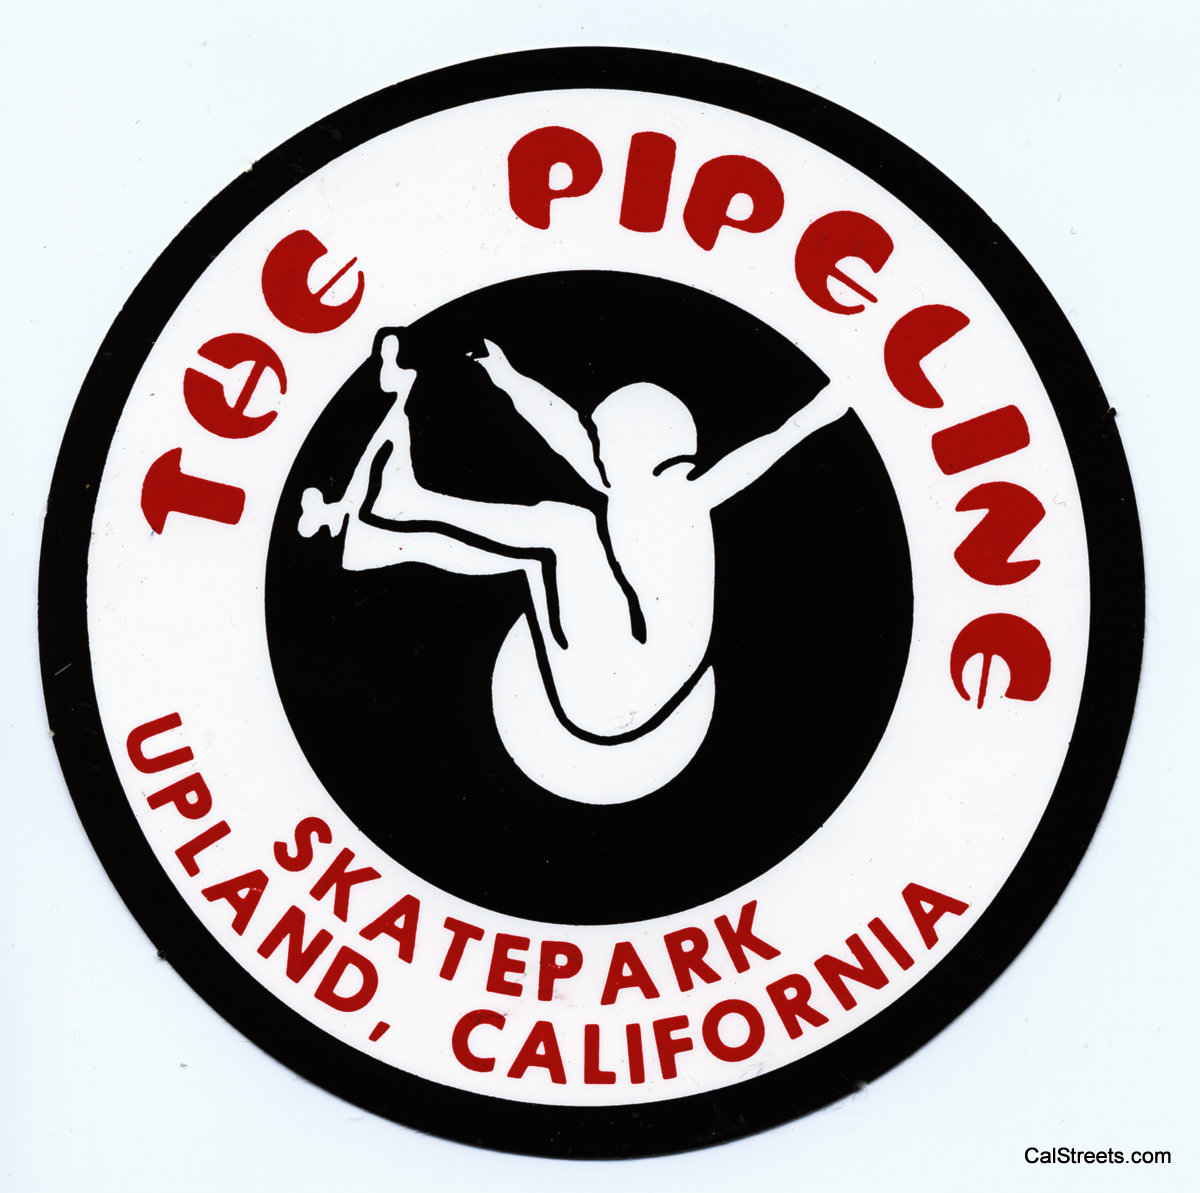 The-Pipline-SkatePark-Uplands-California.jpg